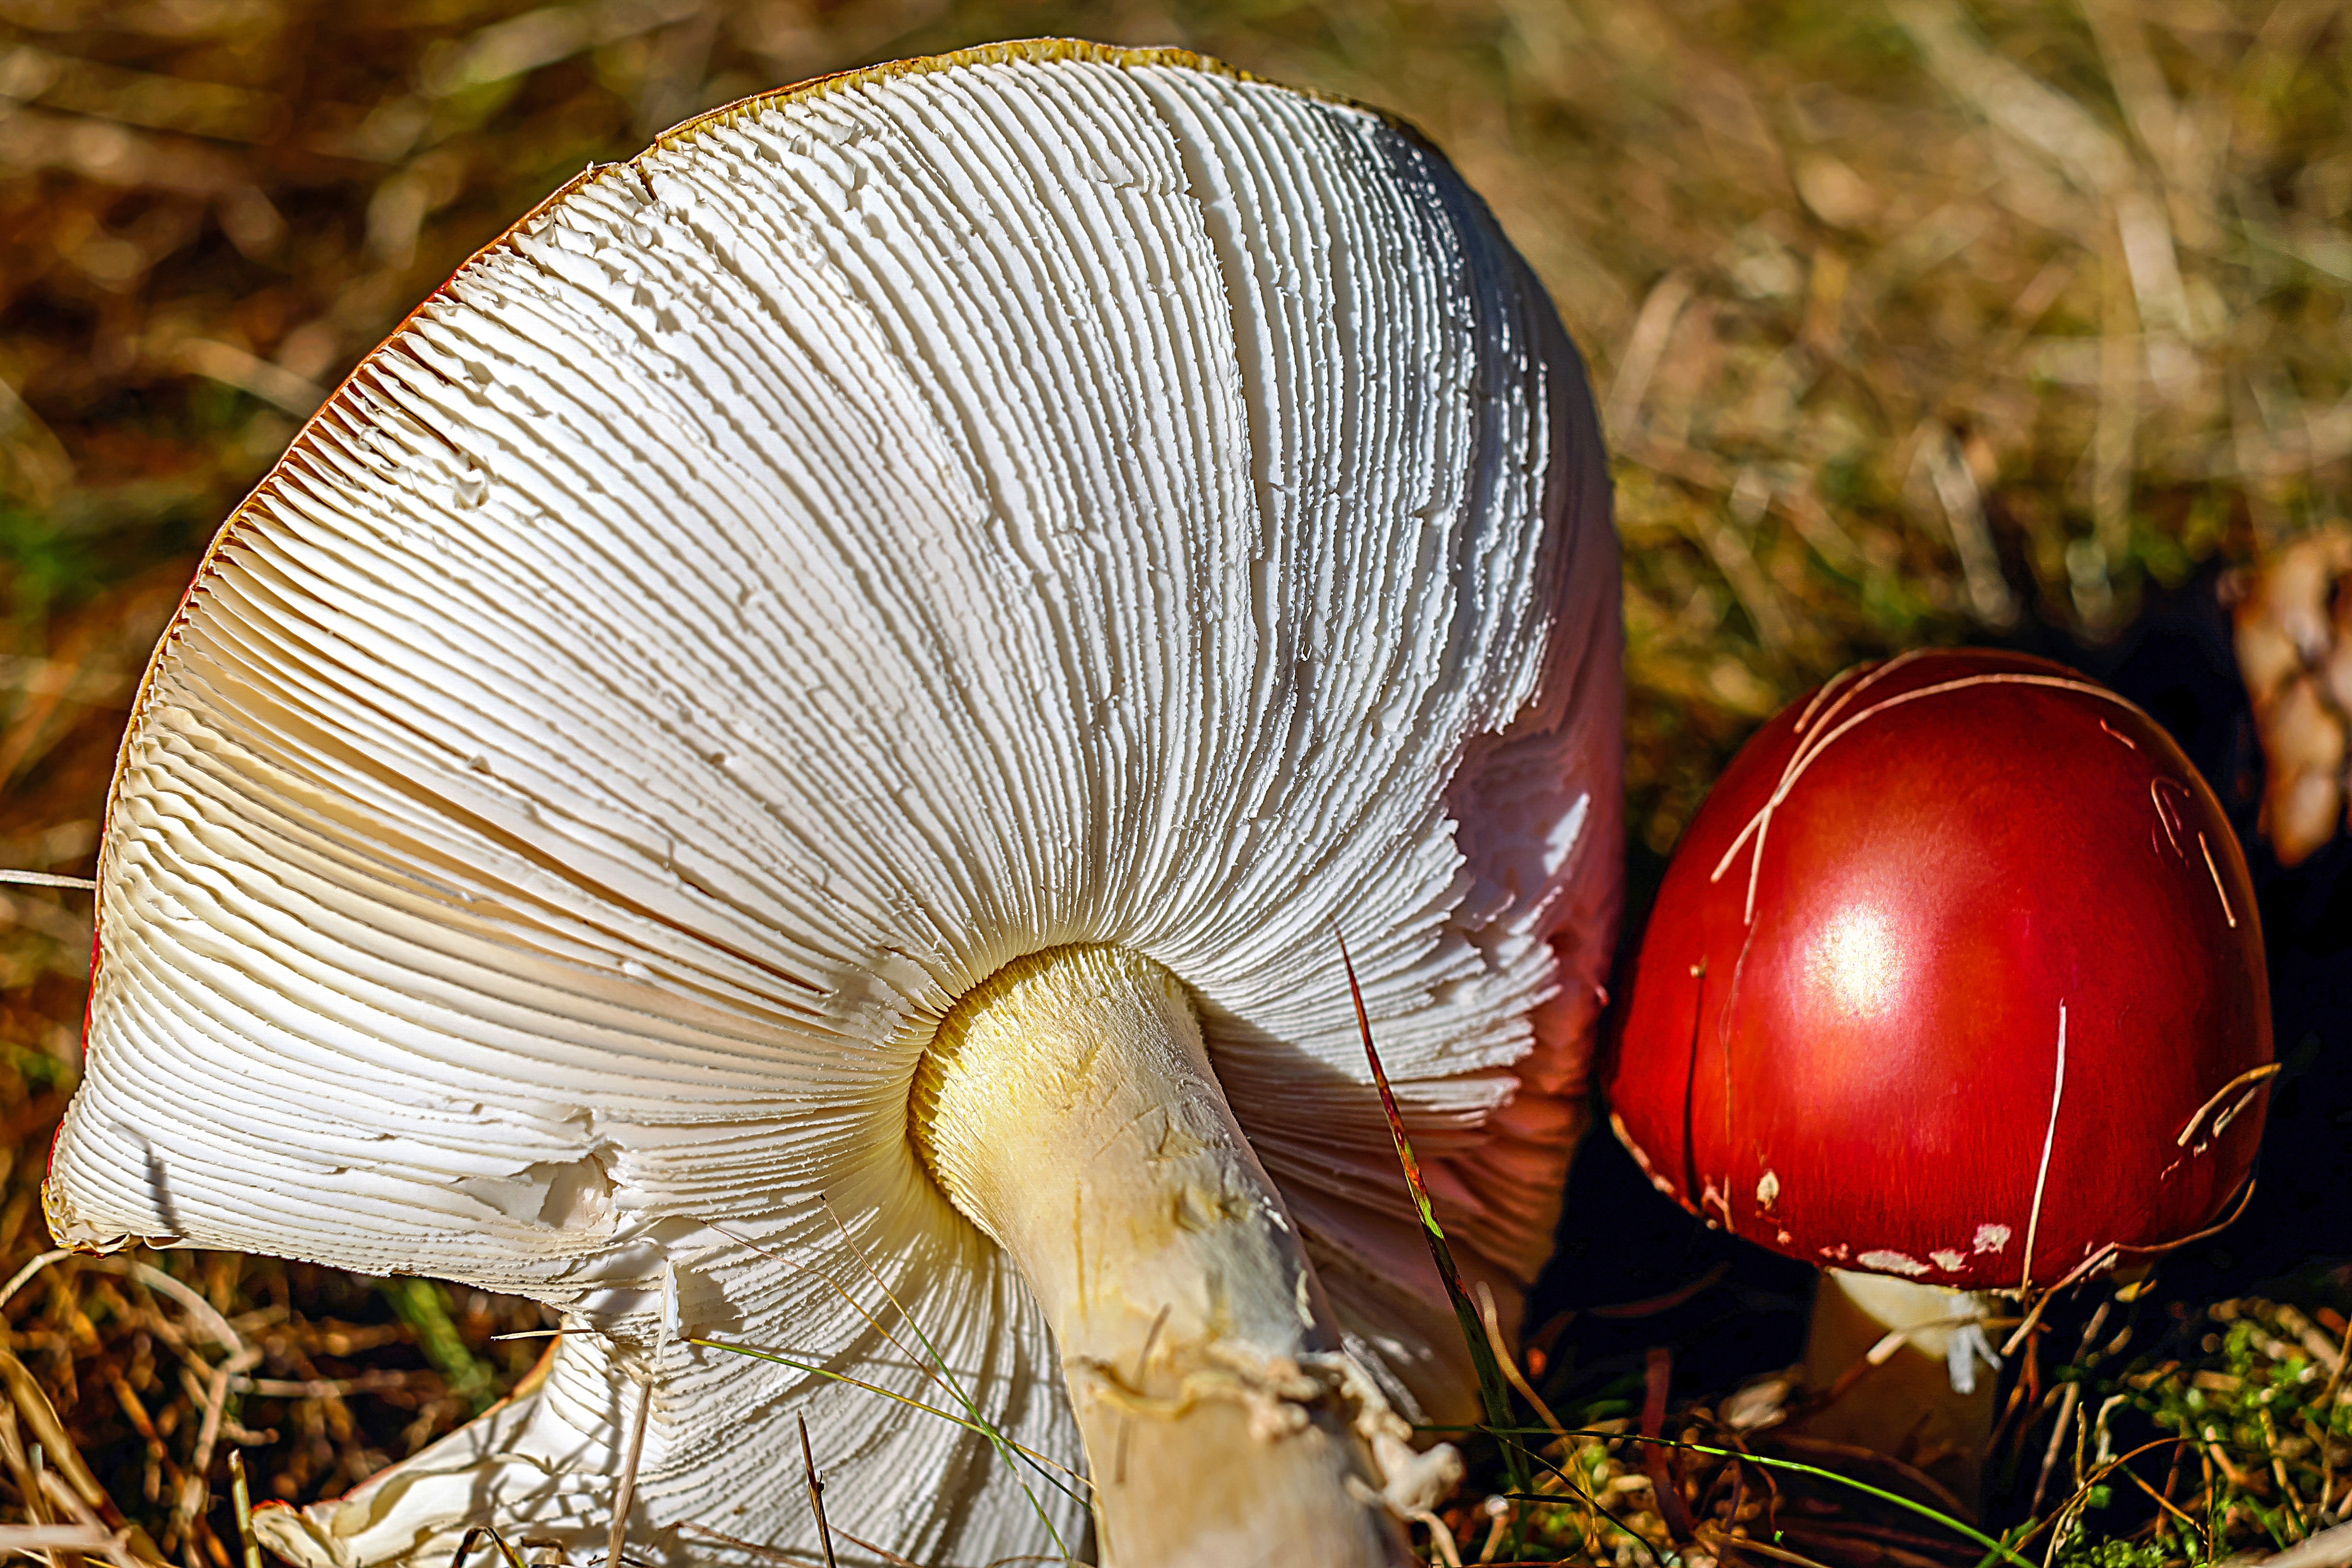 2 red mushrooms